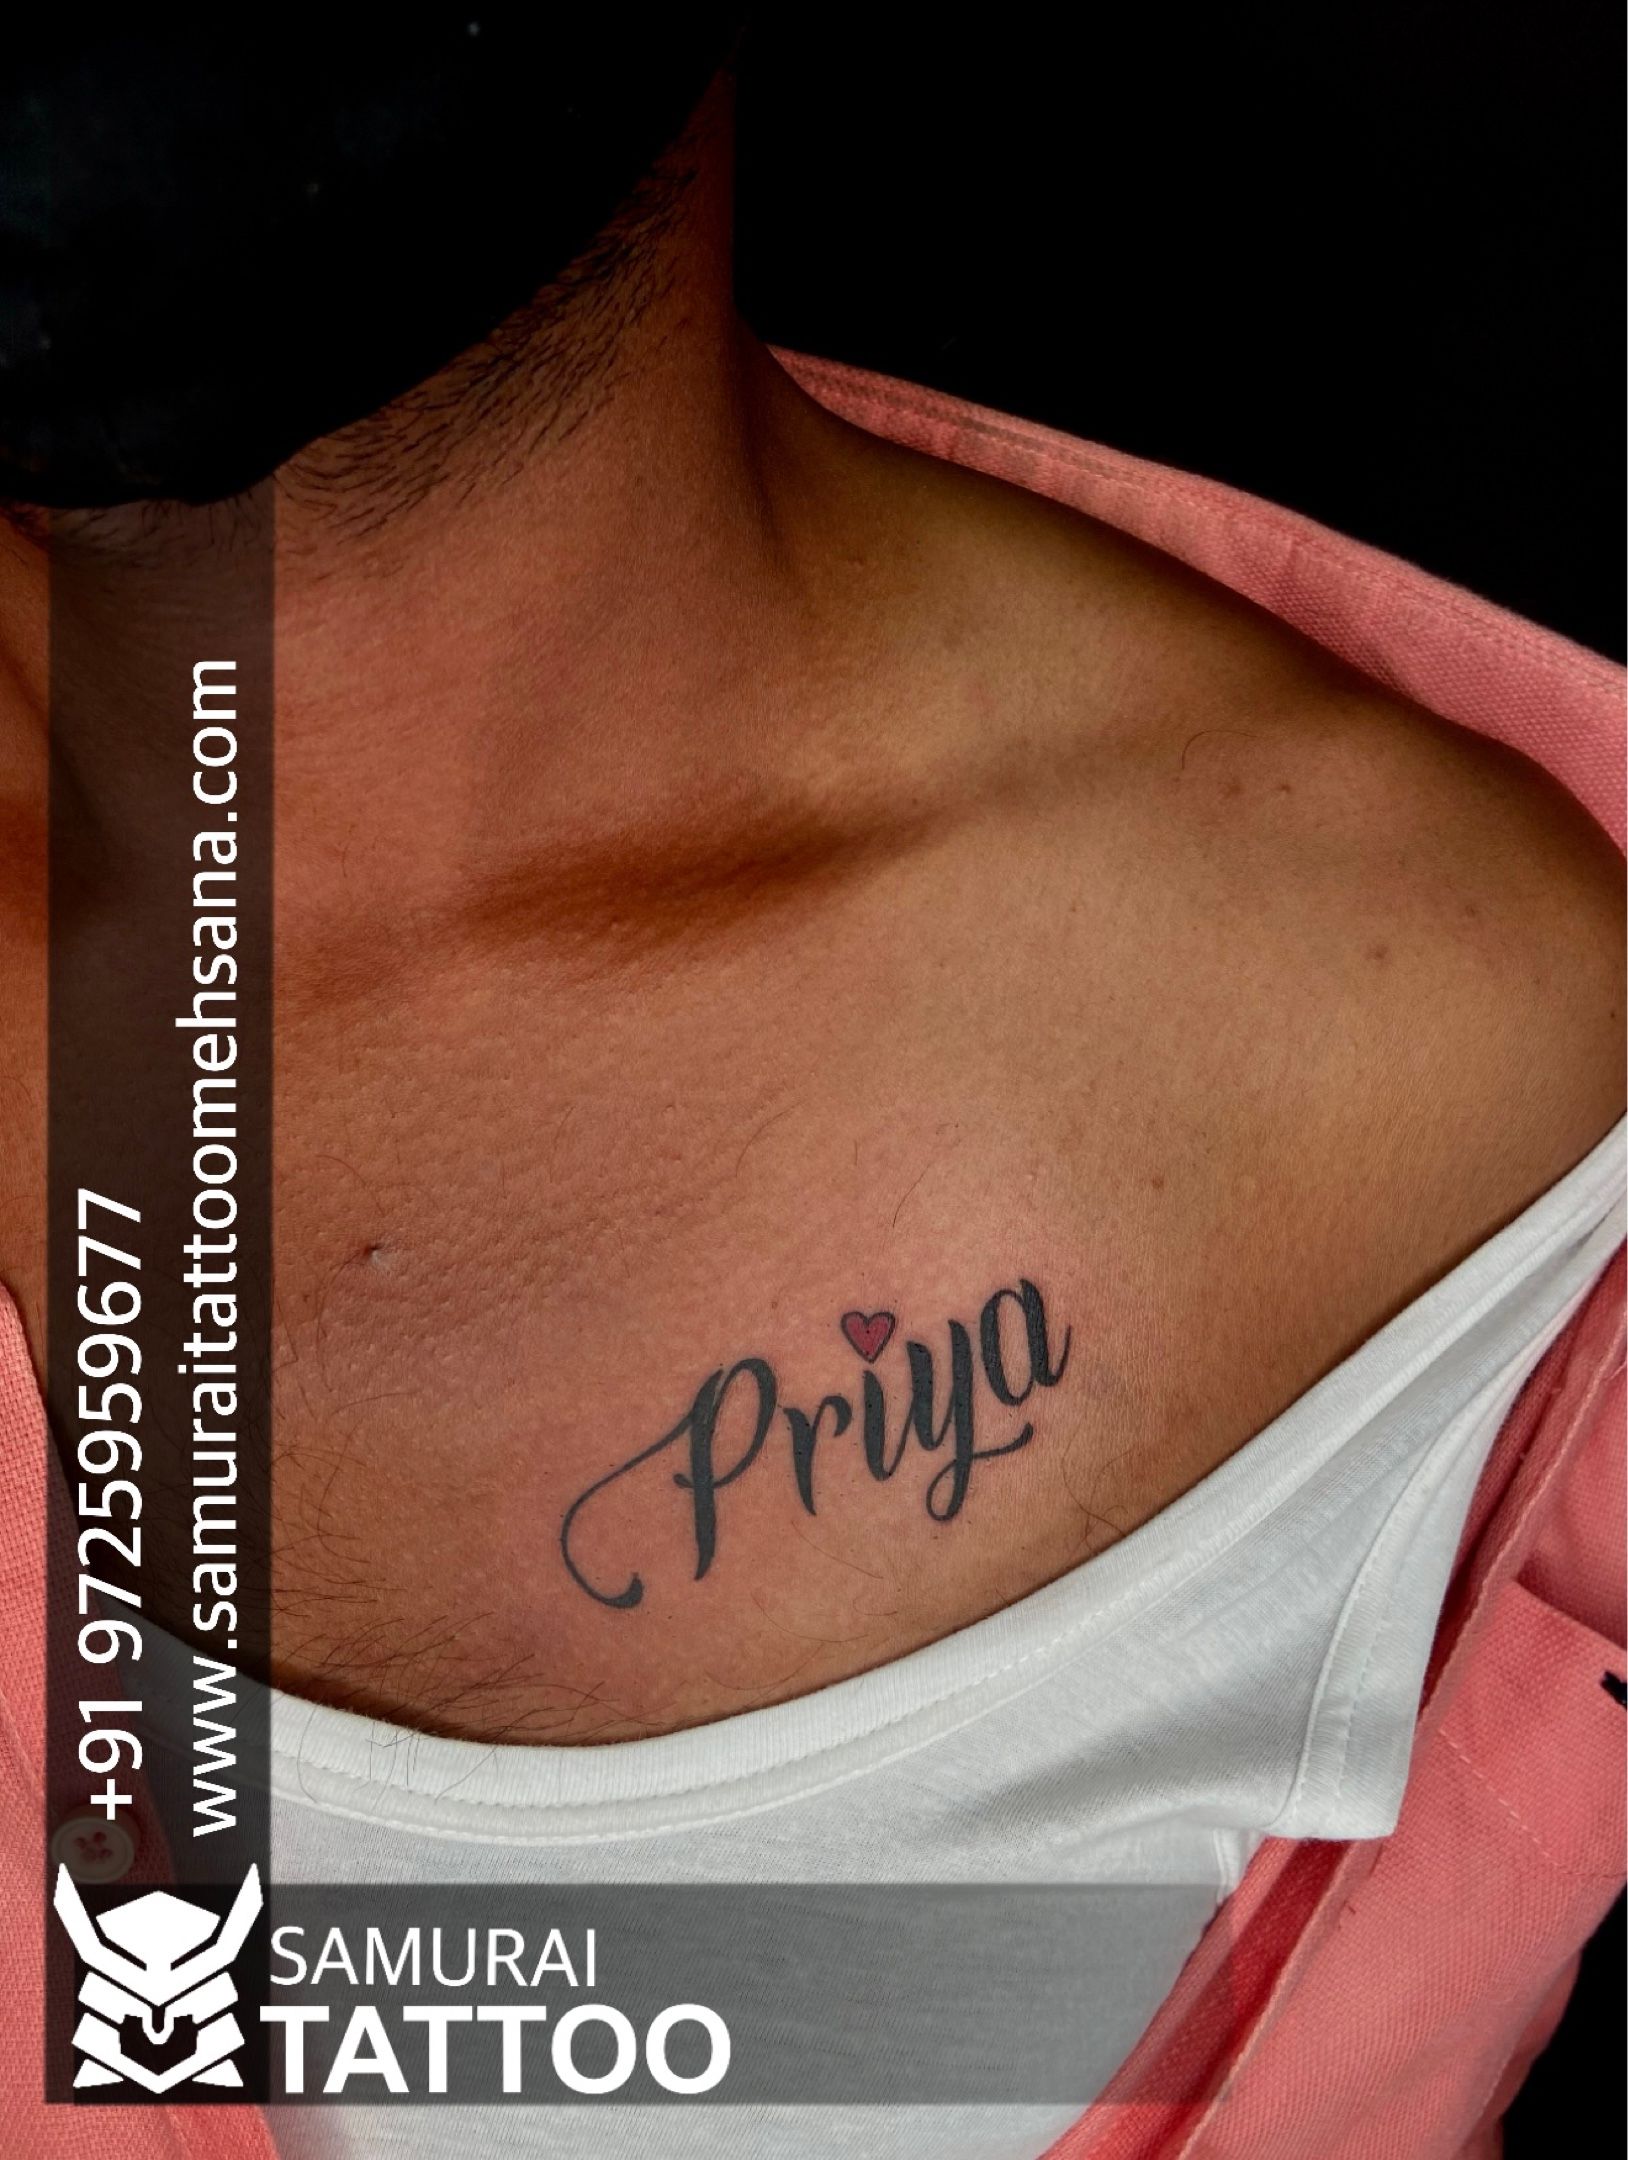 Priya Name Tattoo  Tattoos Small shoulder tattoos Heart tattoos with  names